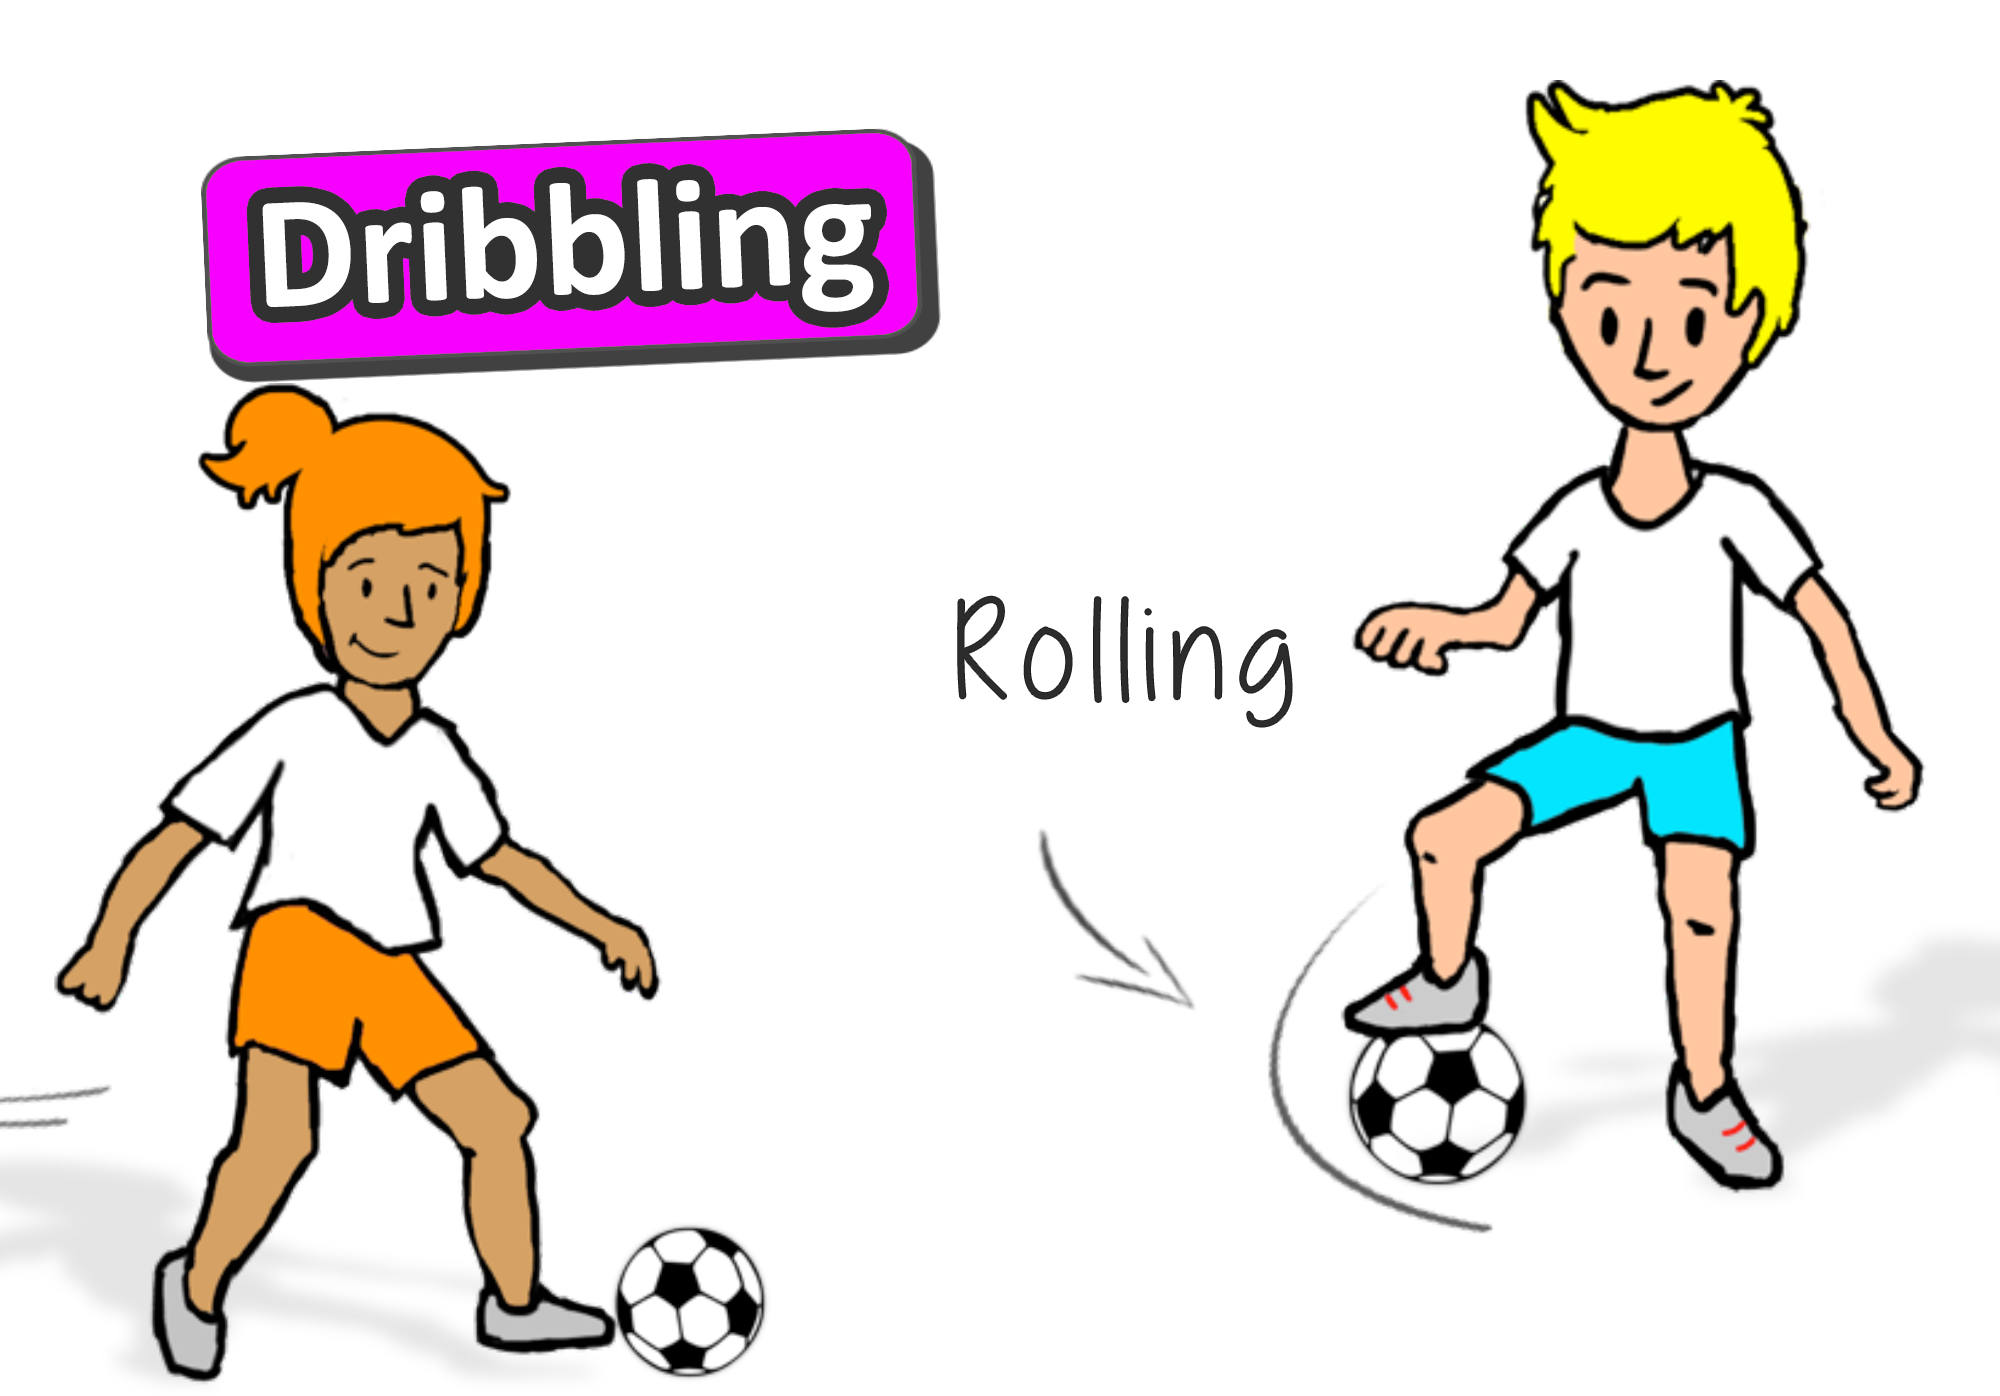 soccer skills physical education games ideas teaching school